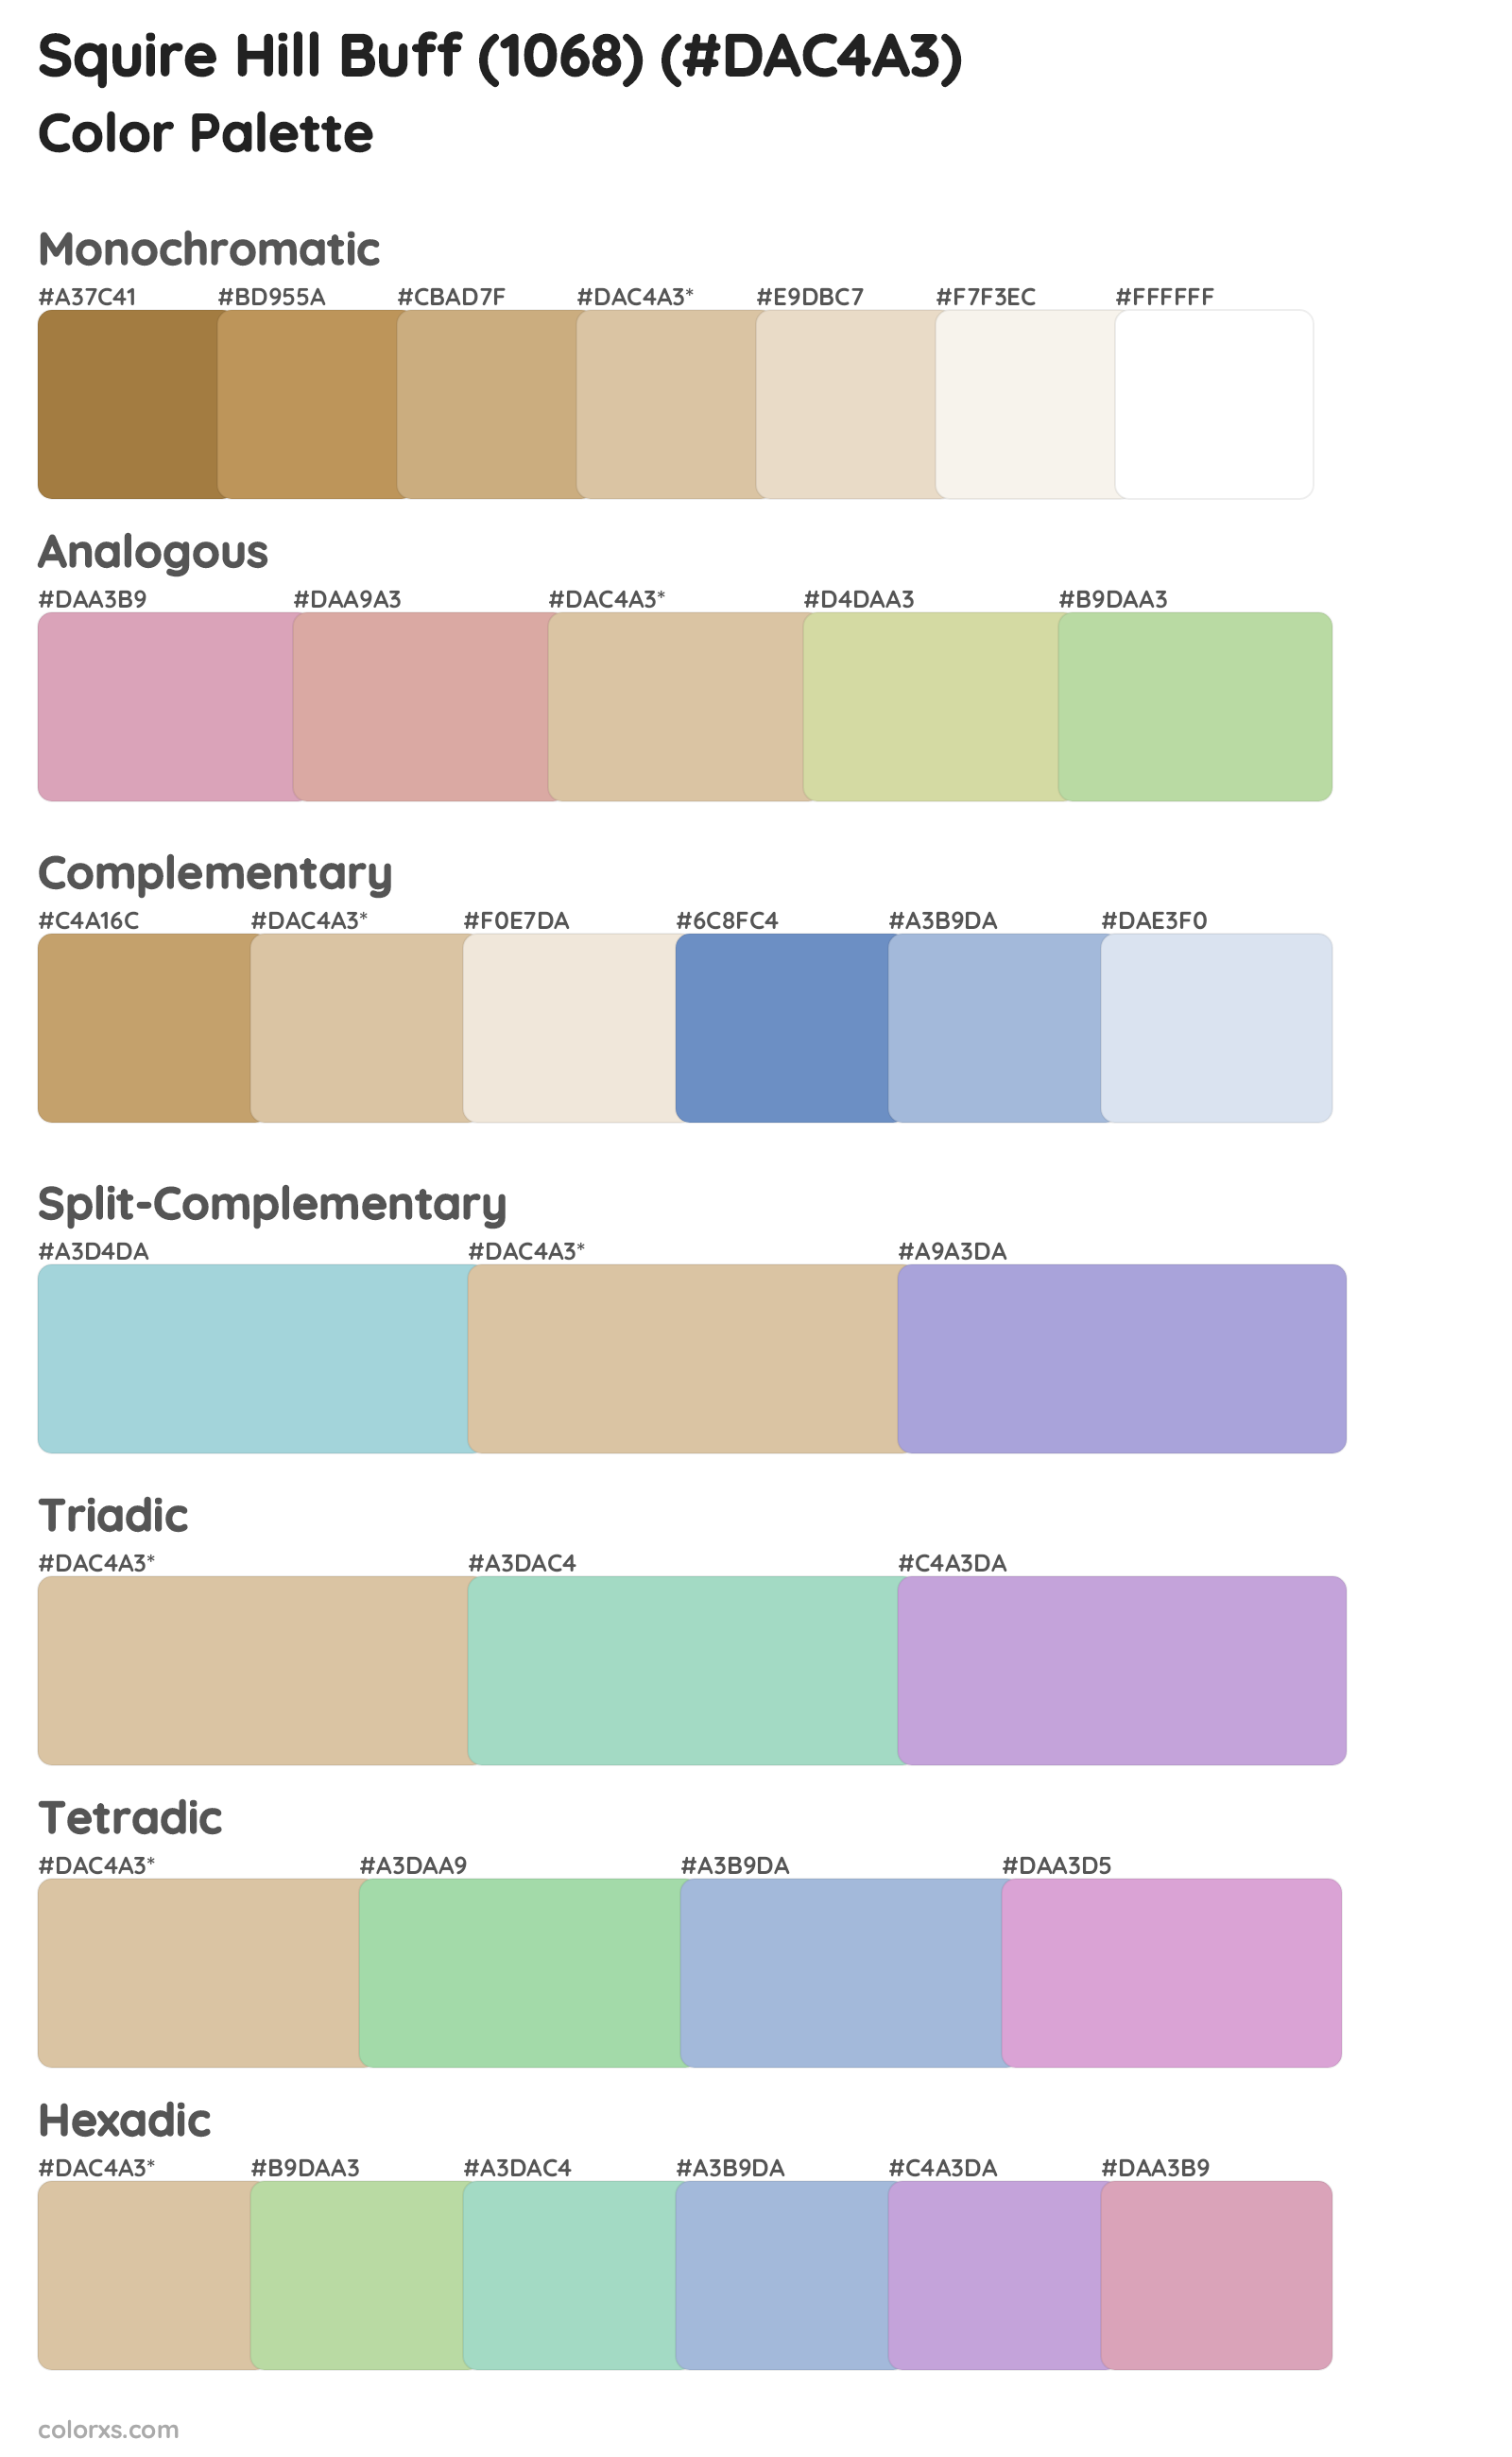 Squire Hill Buff (1068) Color Scheme Palettes